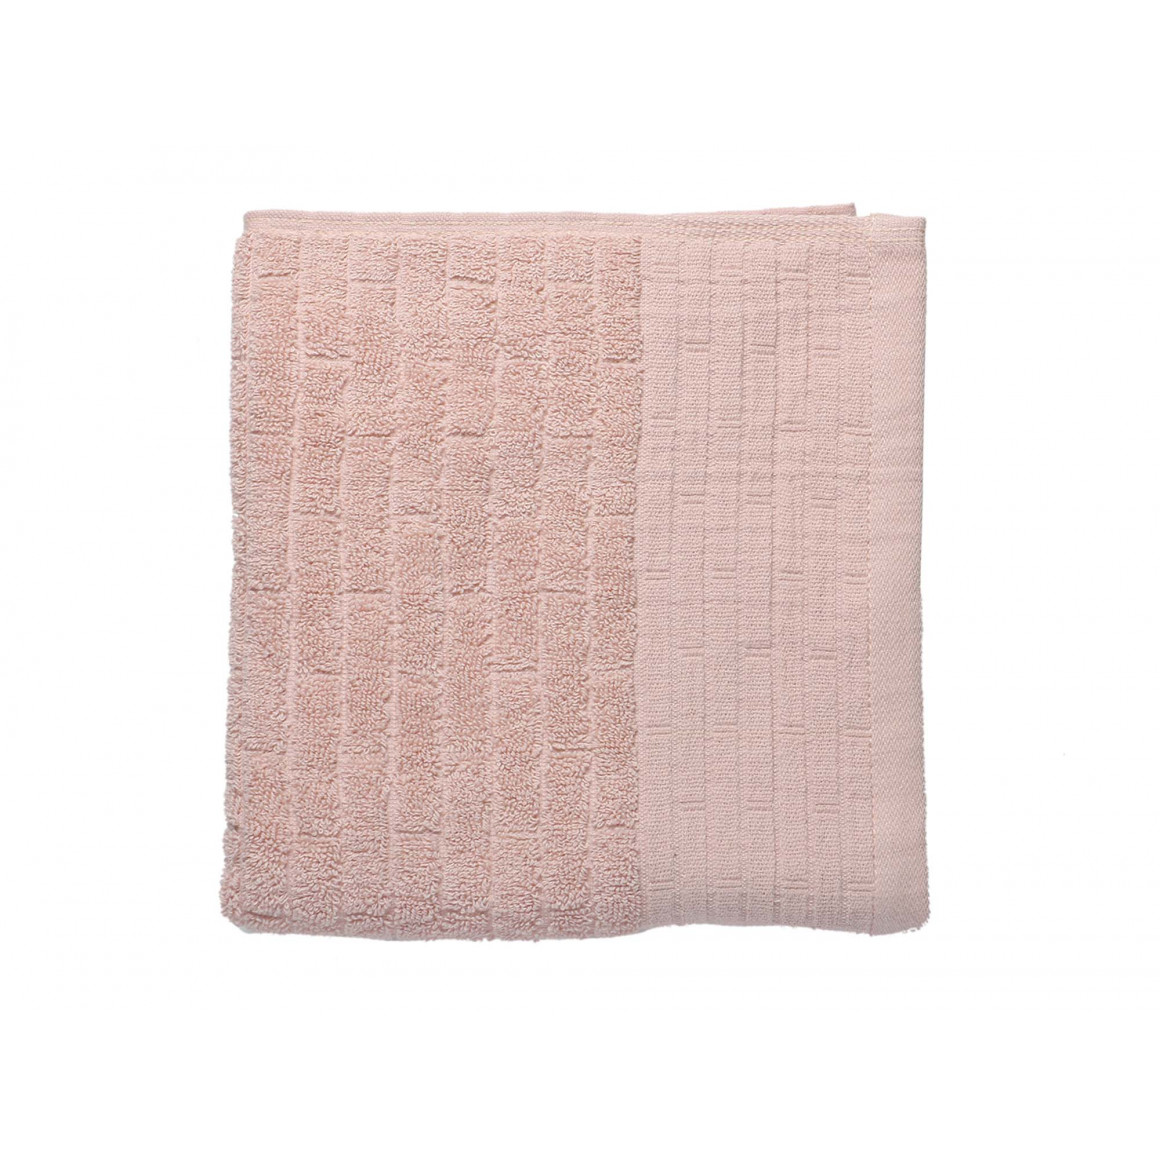 face towel RESTFUL CREAM PINK 500GSM 50X90